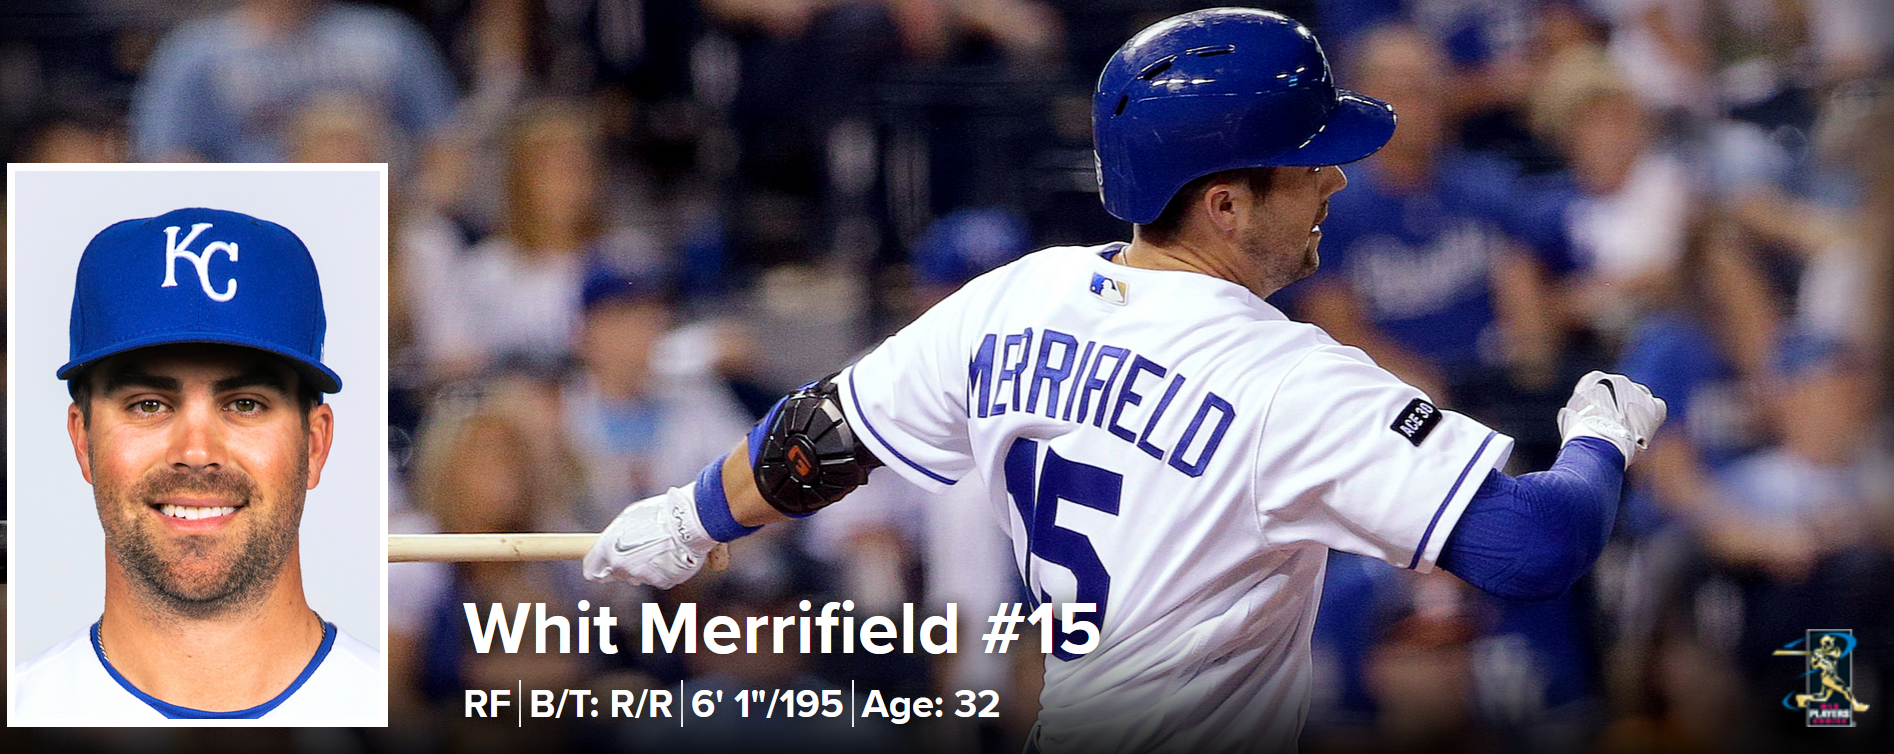 Whit Merrifield, Baseball Wiki